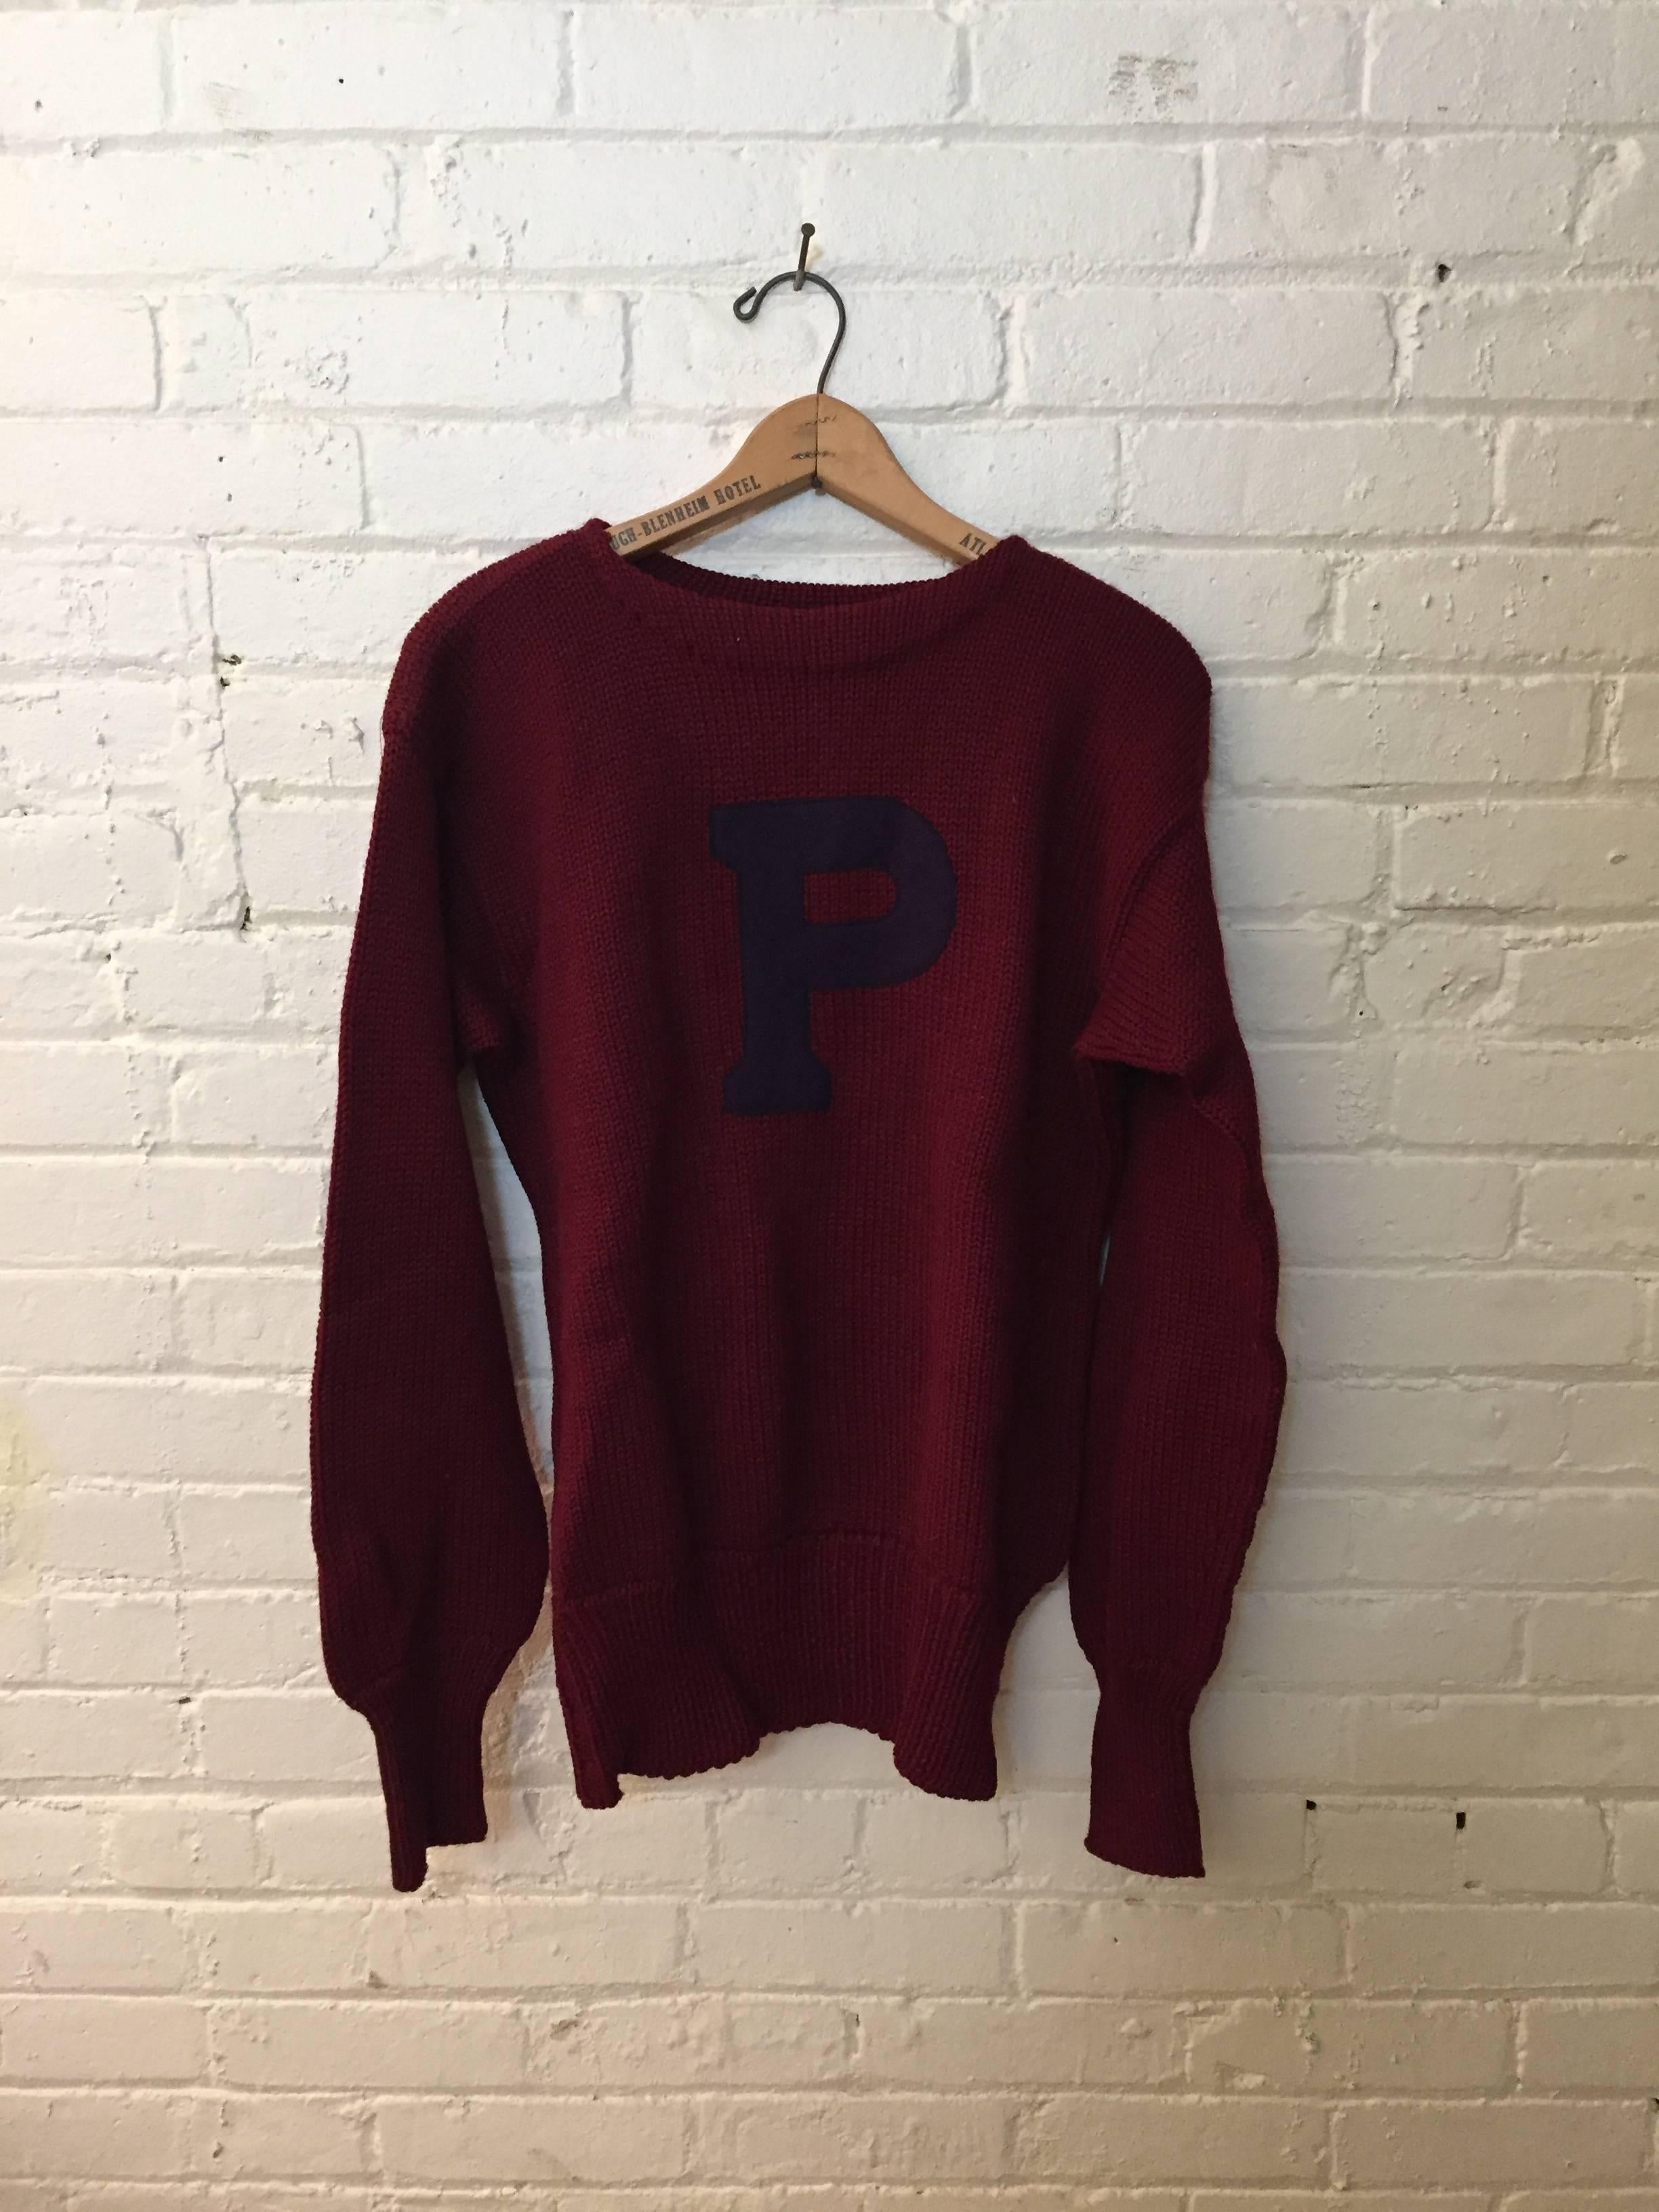 Woven 1950s University of Pennsylvania Ivy League Wool Letterman's Sweater